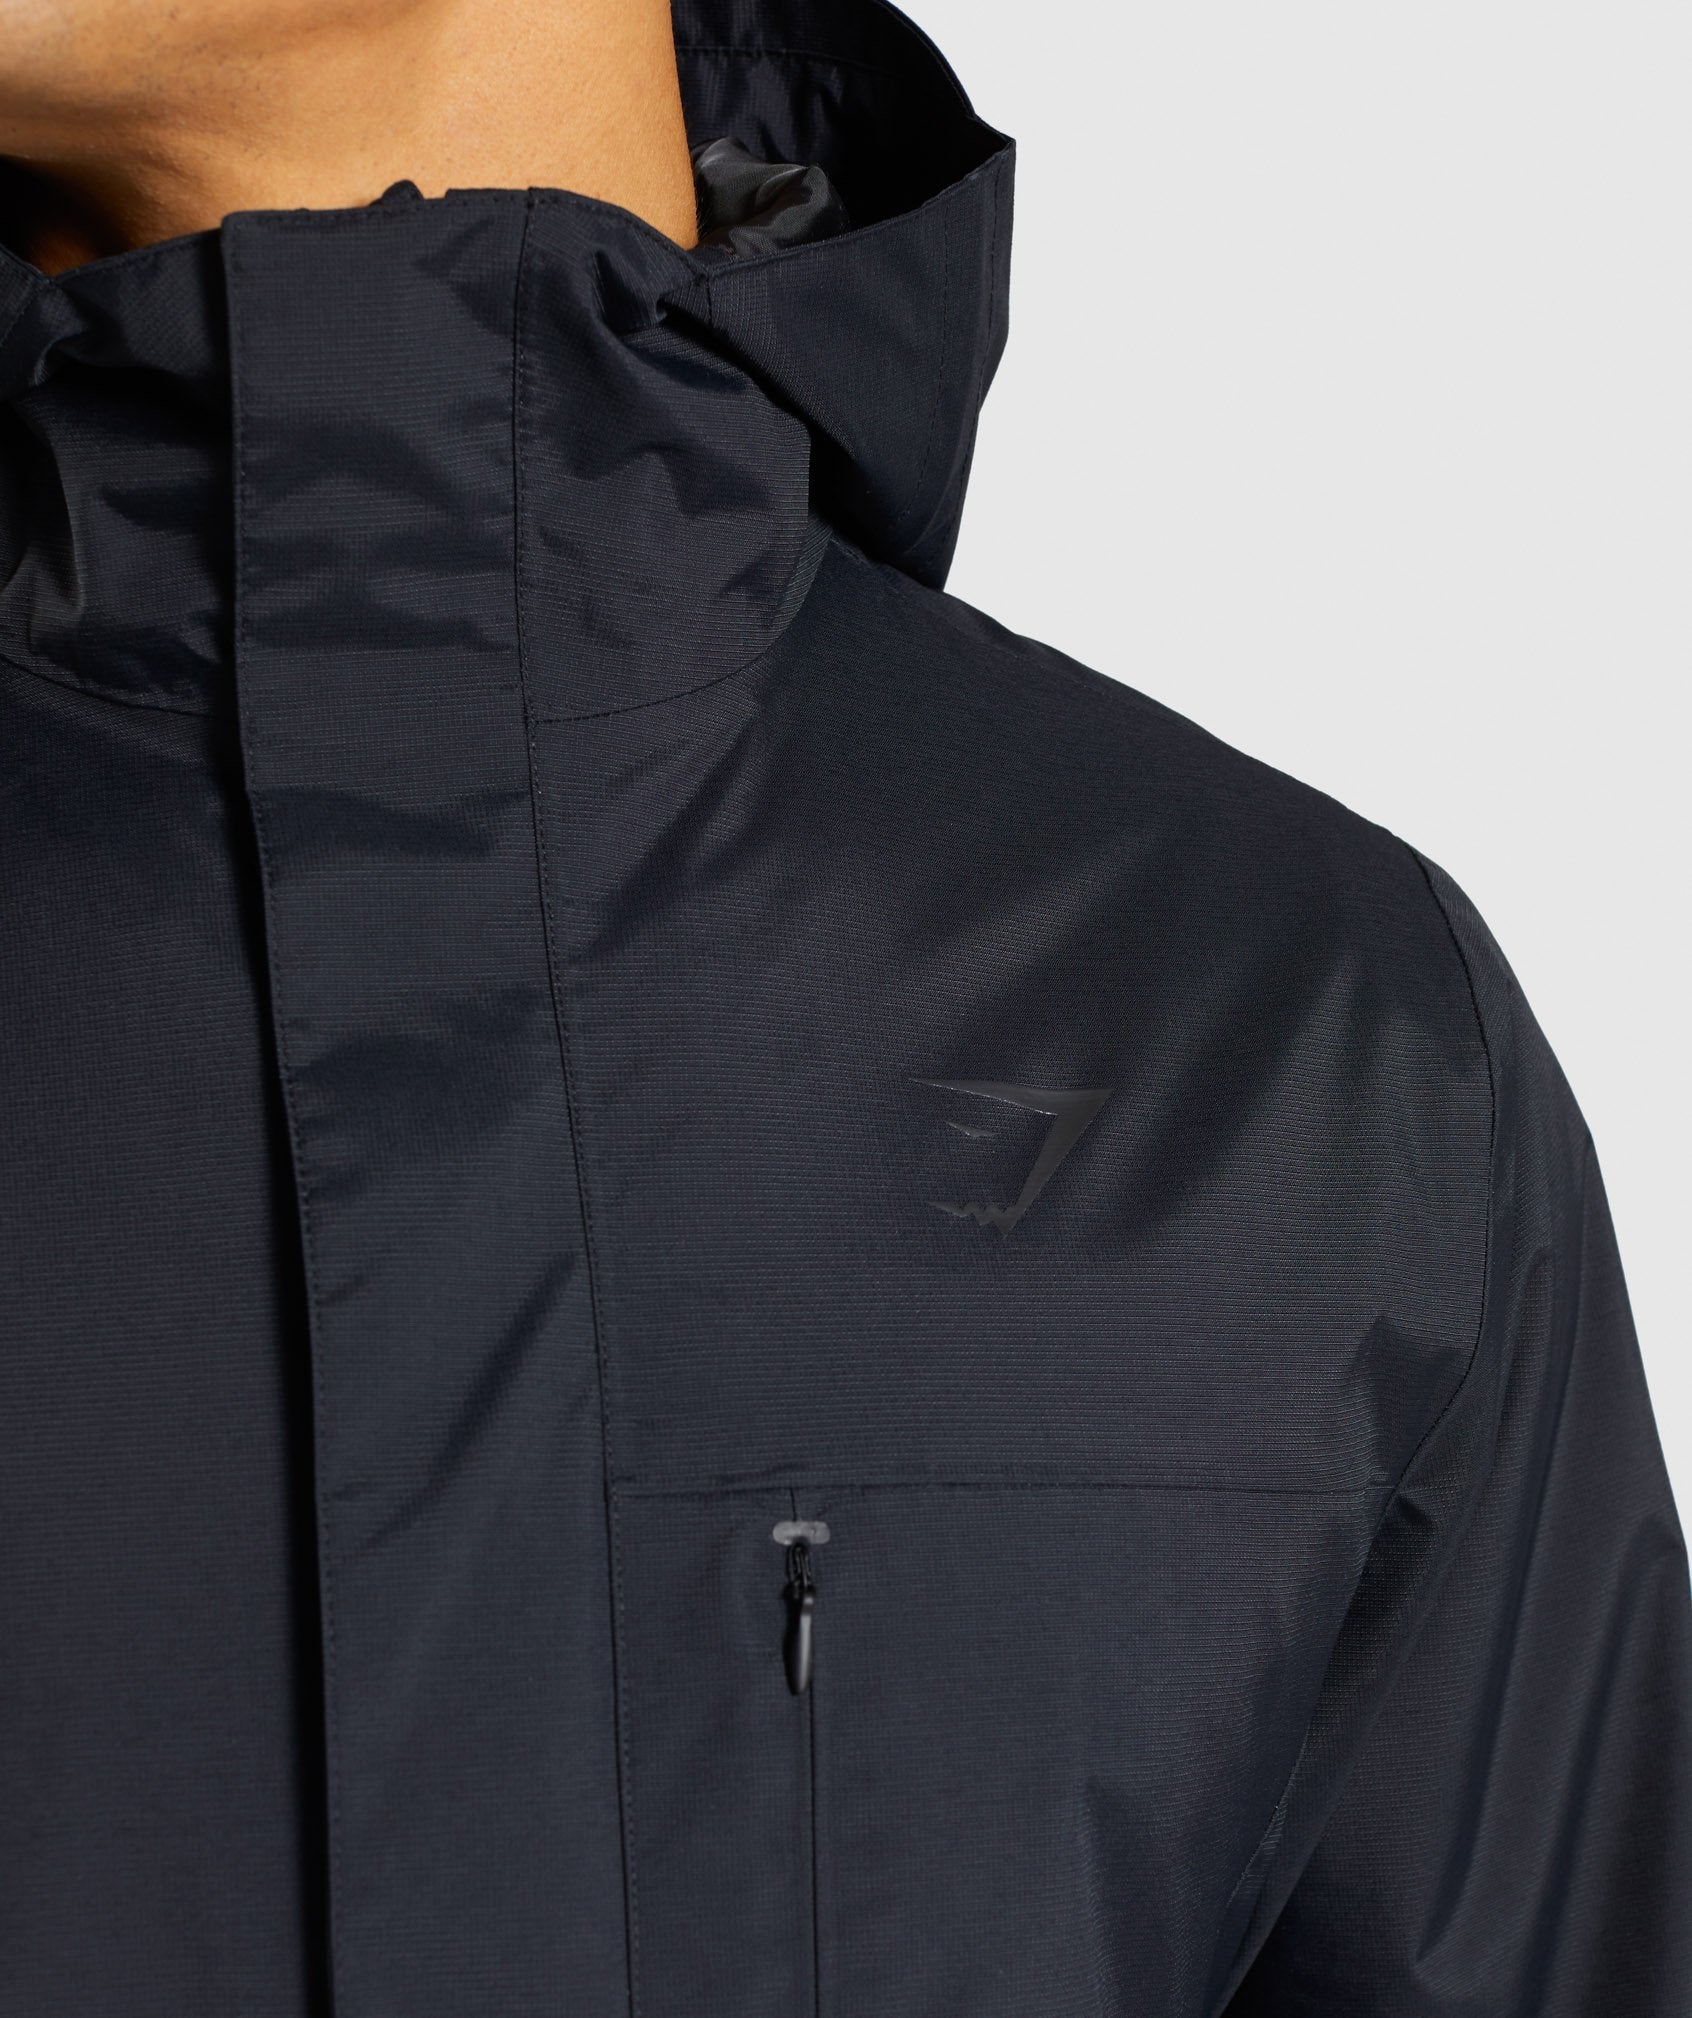 Vortex Waterproof Jacket in Black - view 4